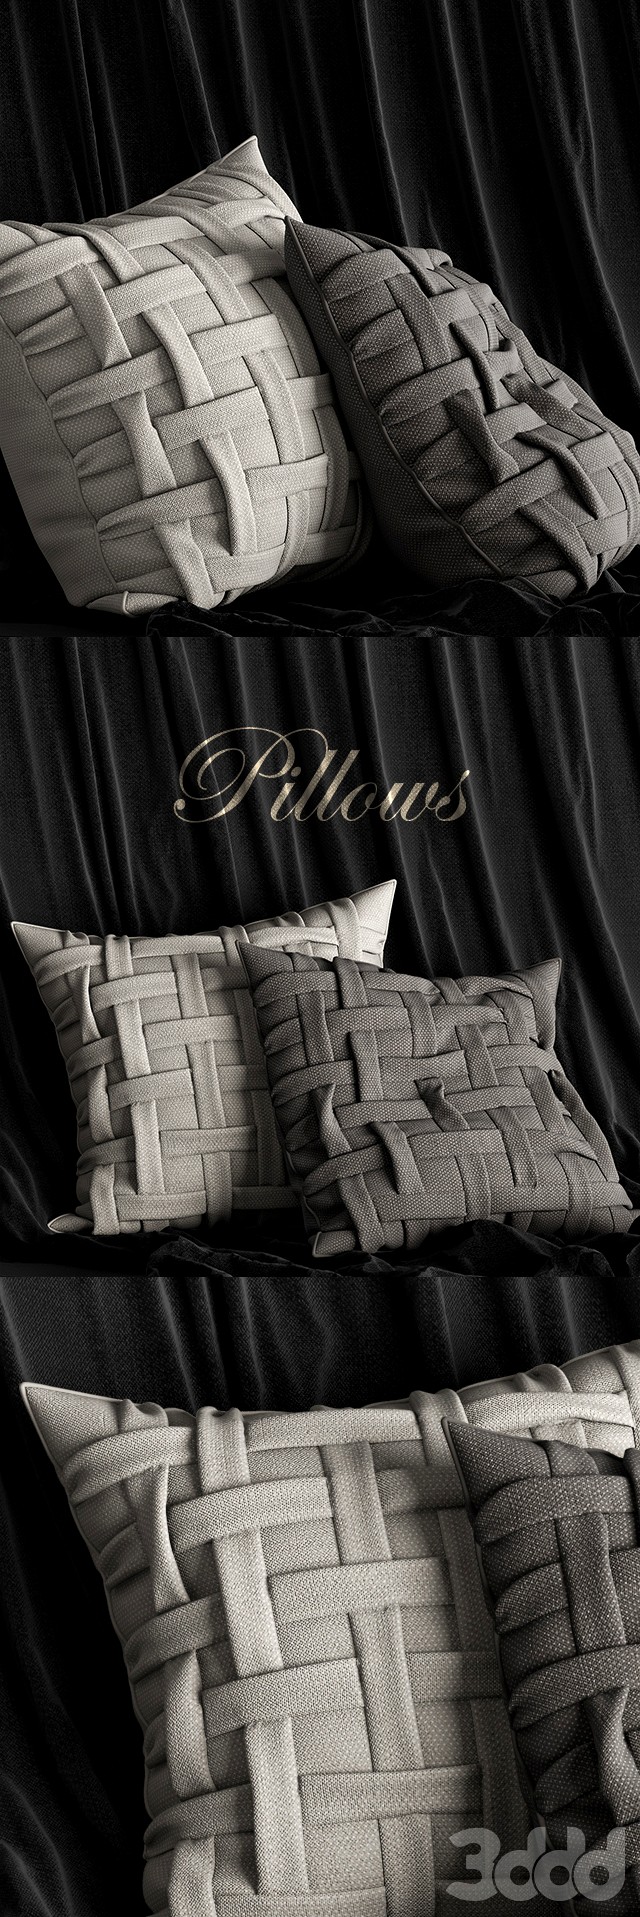 Pillows #6